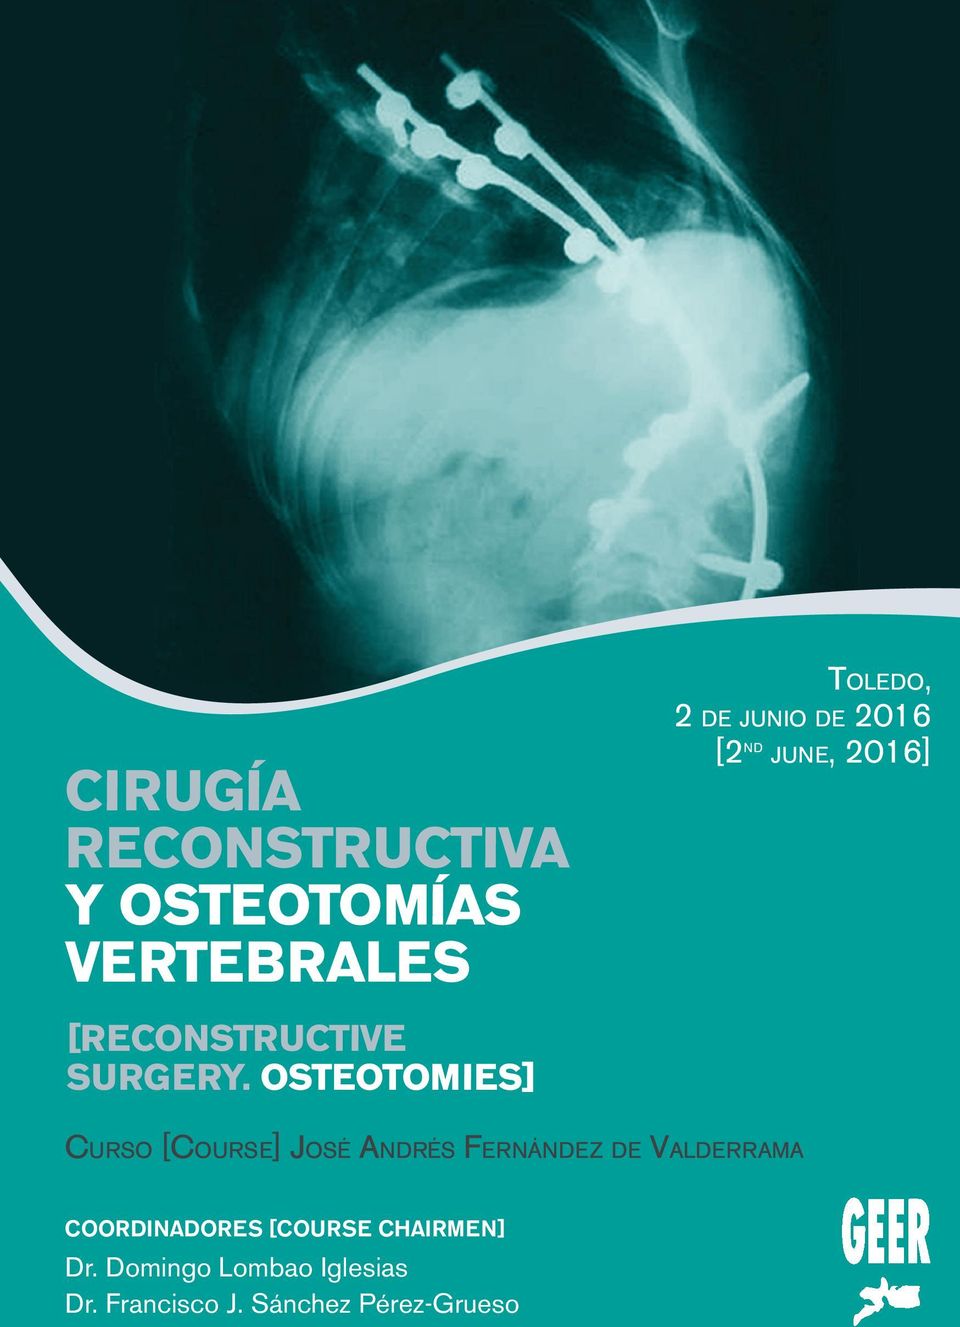 osteotomies] CURSO [COURSE] JOSÉ ANDRÉS FERNÁNDEZ DE VALDERRAMA